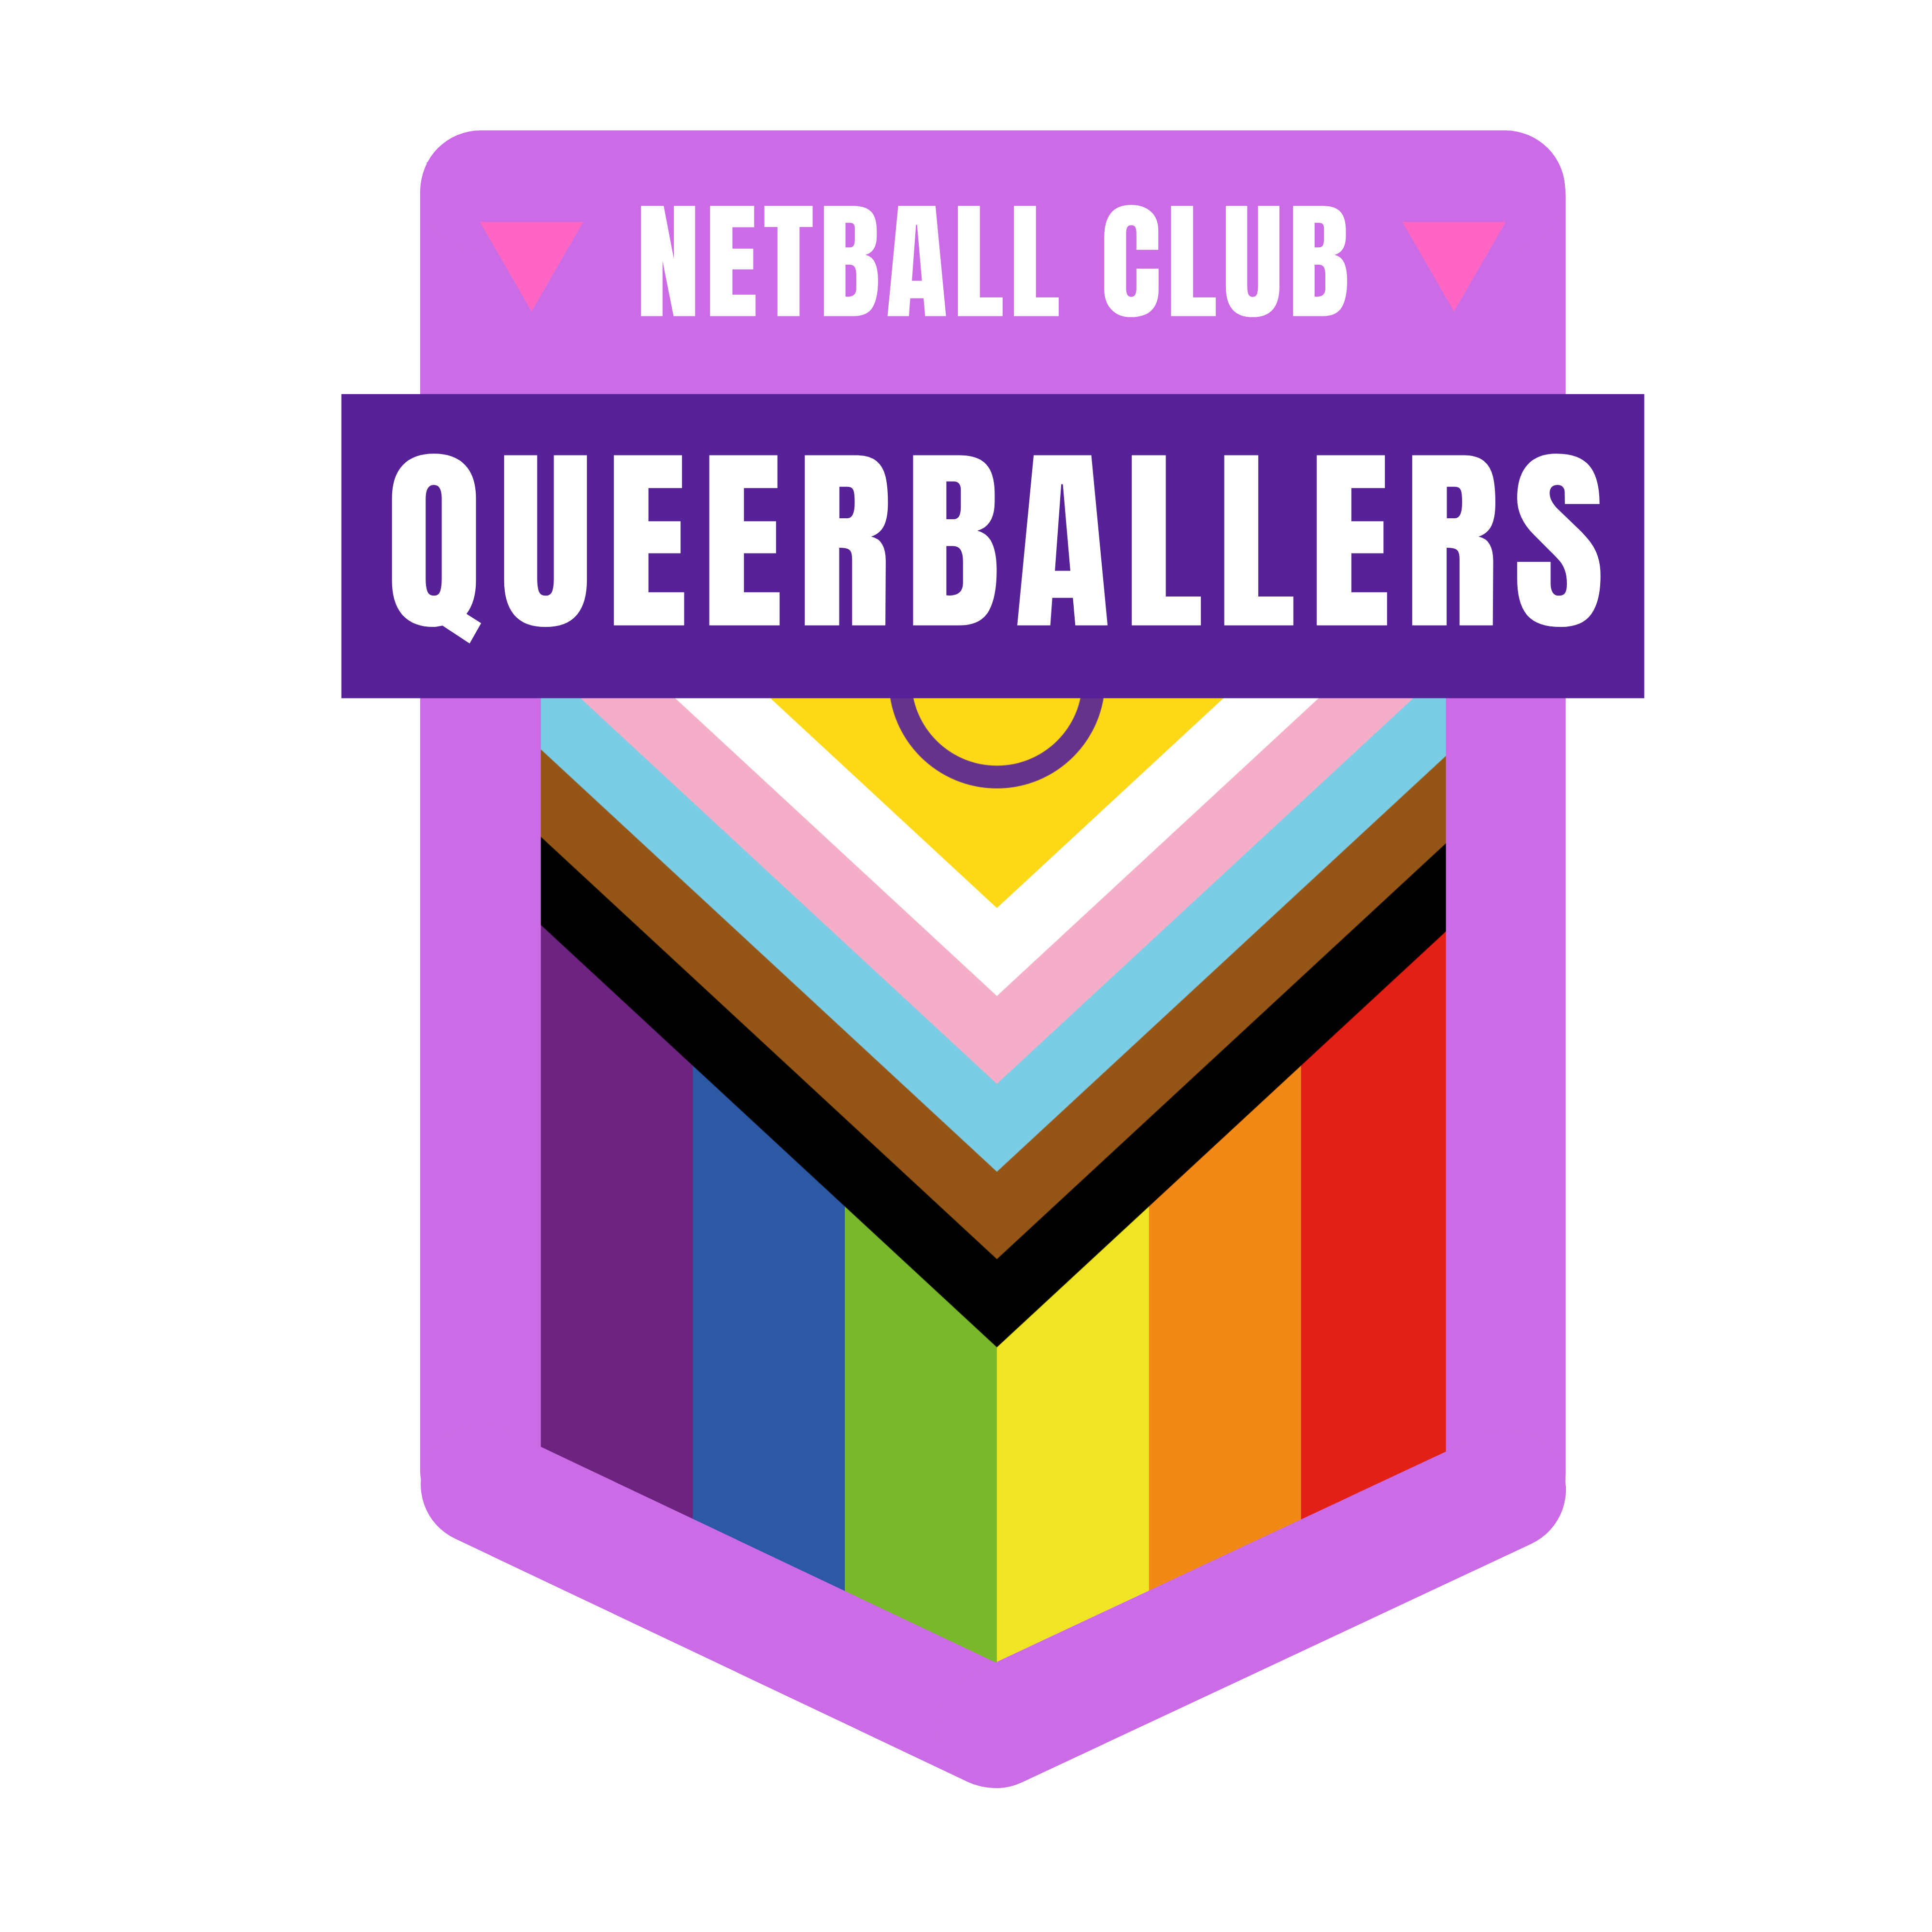 Queer Ballers netball club - friend of Unicorns